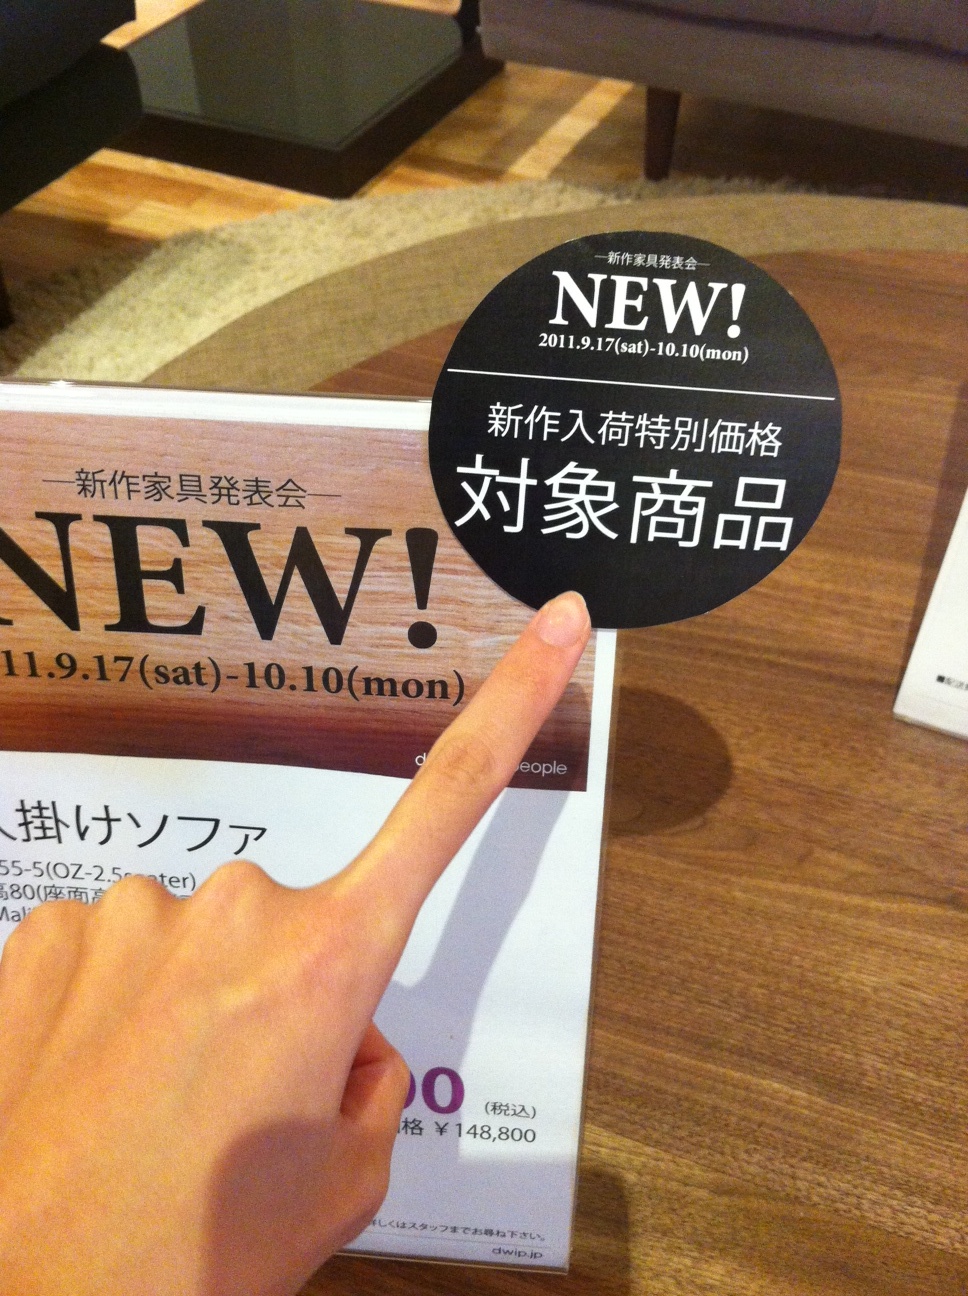 http://dwip.jp/staffblog/2011/09/24/10.JPG